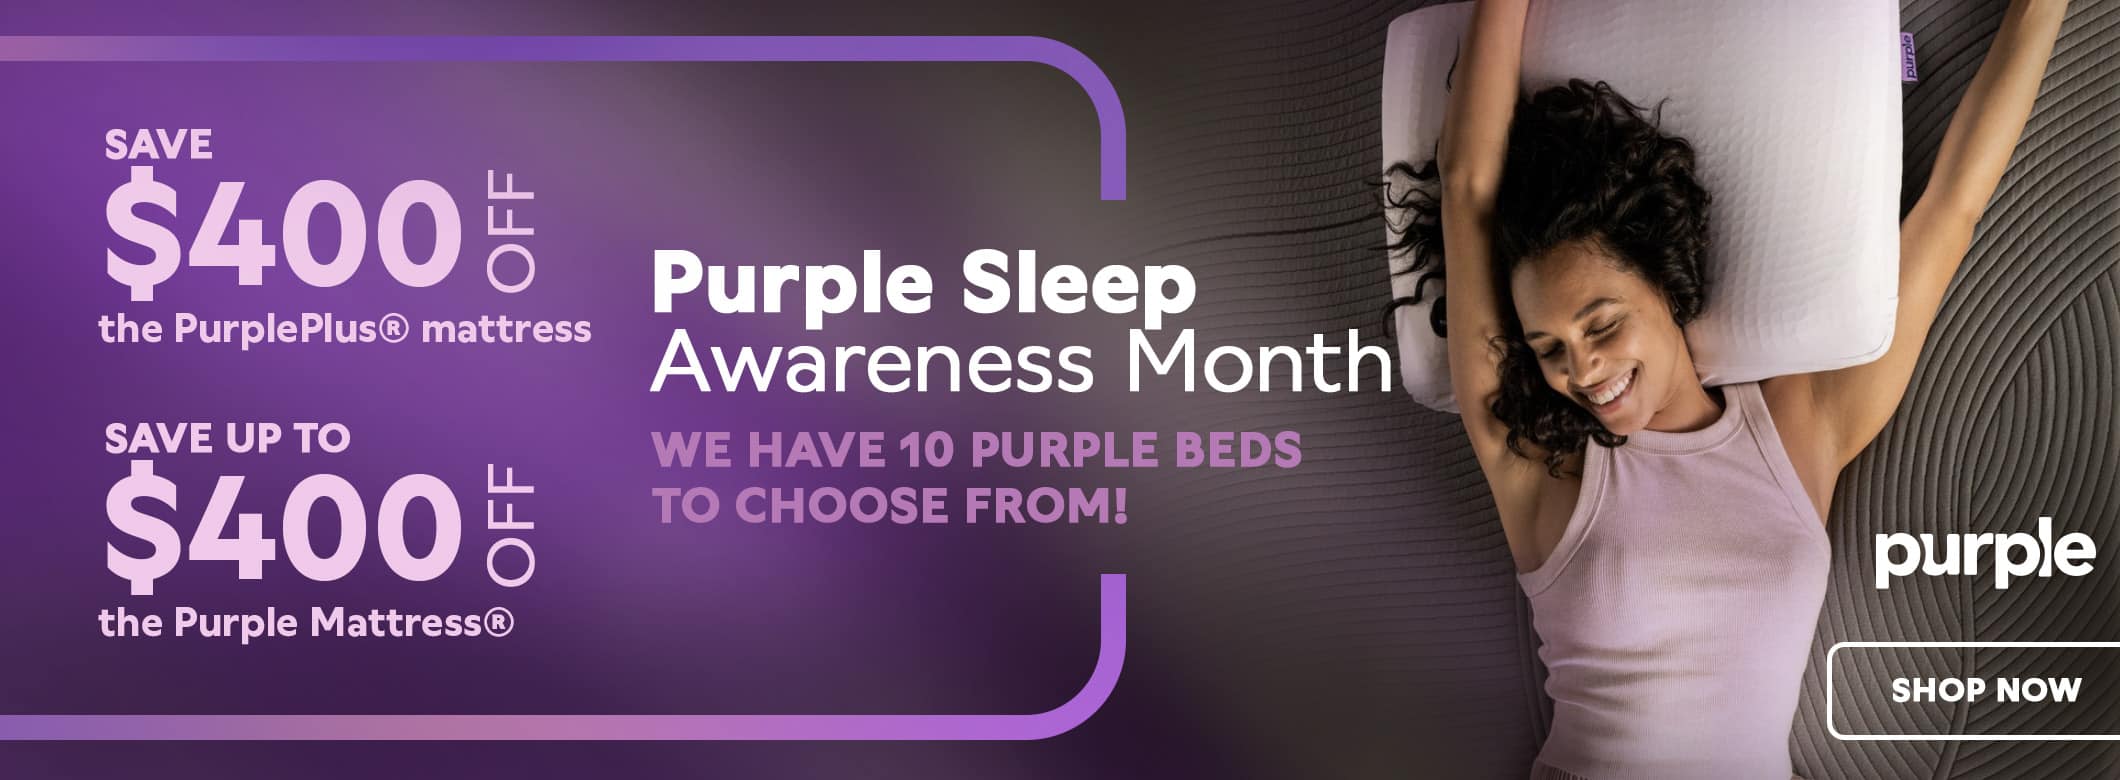 Purple Sleep Awareness